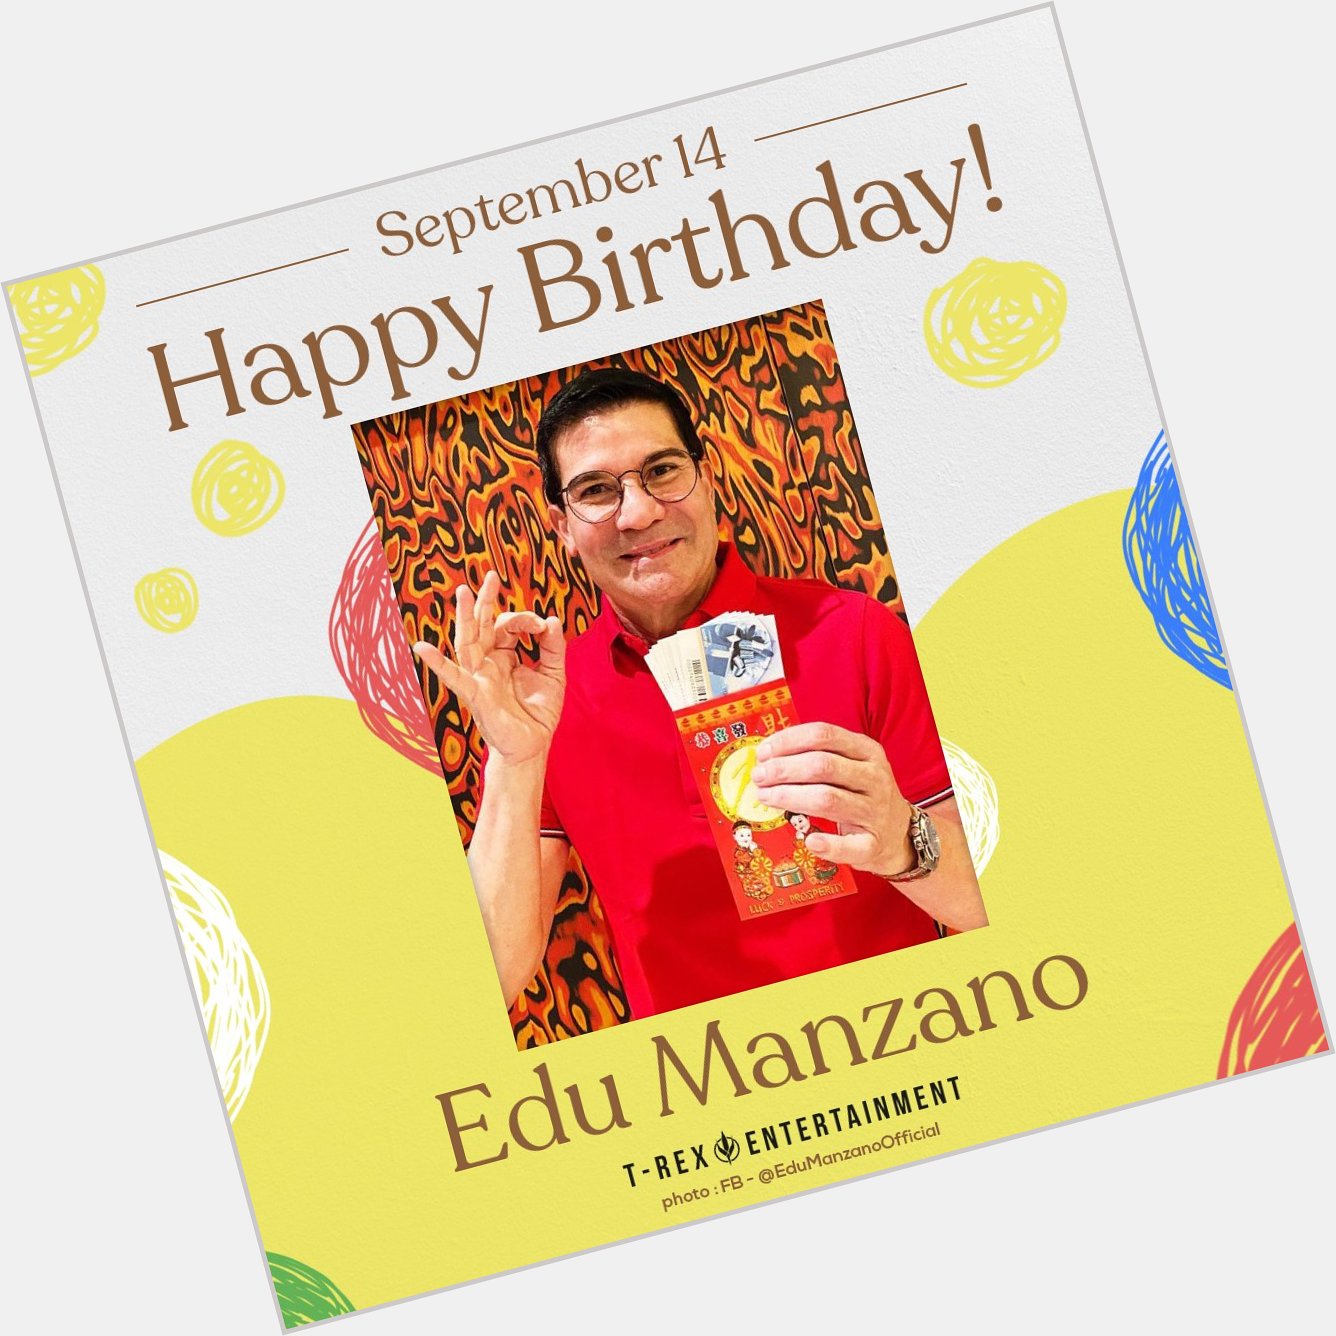 Happy 65th birthday, Edu Manzano ! Trivia: His birth name is Eduardo Barrios Manzano. 